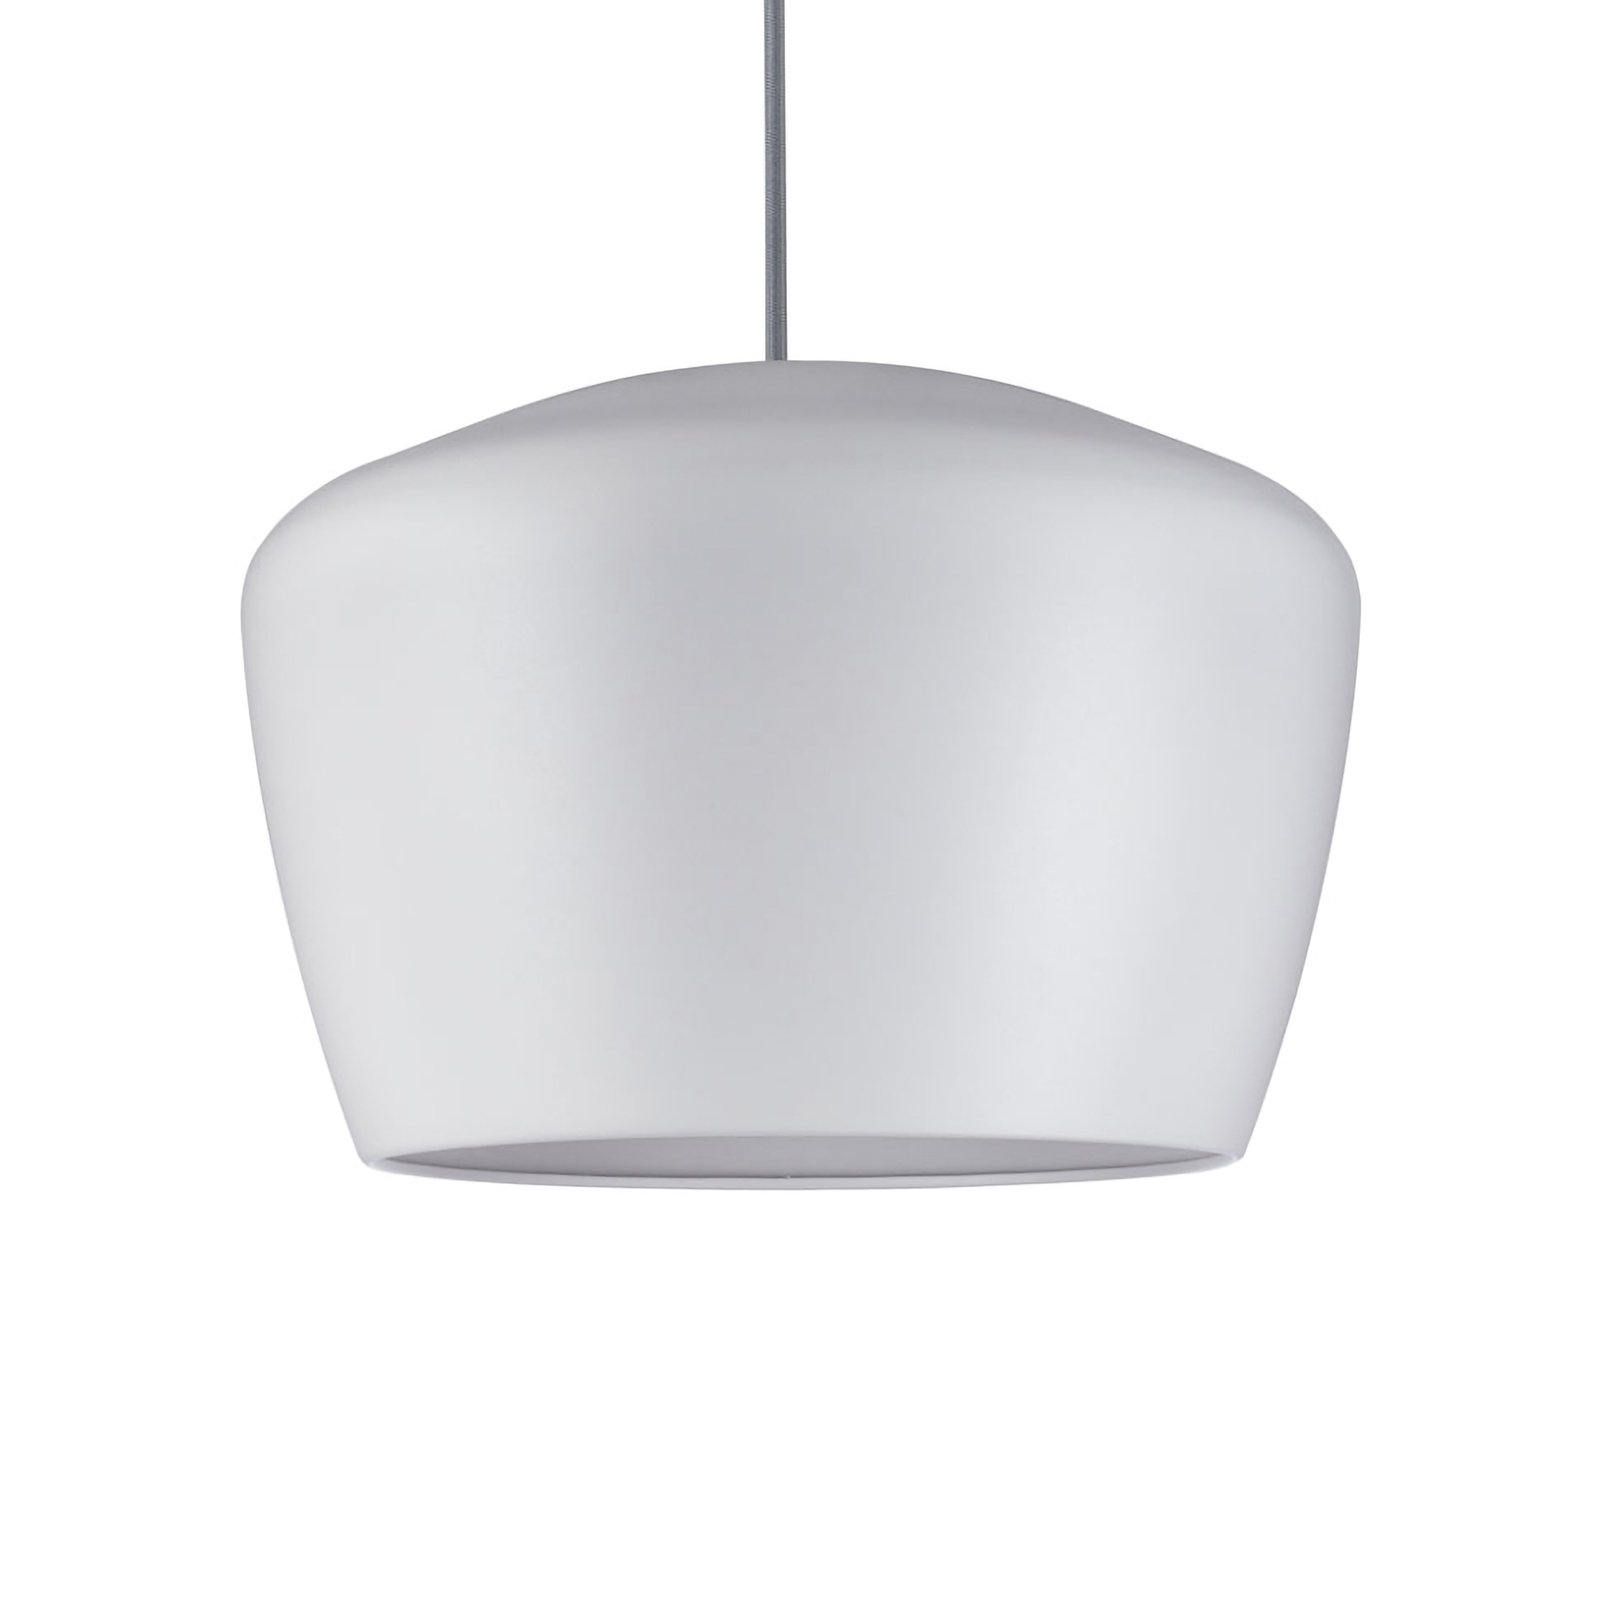 Paulmann lampshade Pom, white, Ø 35 cm, metal